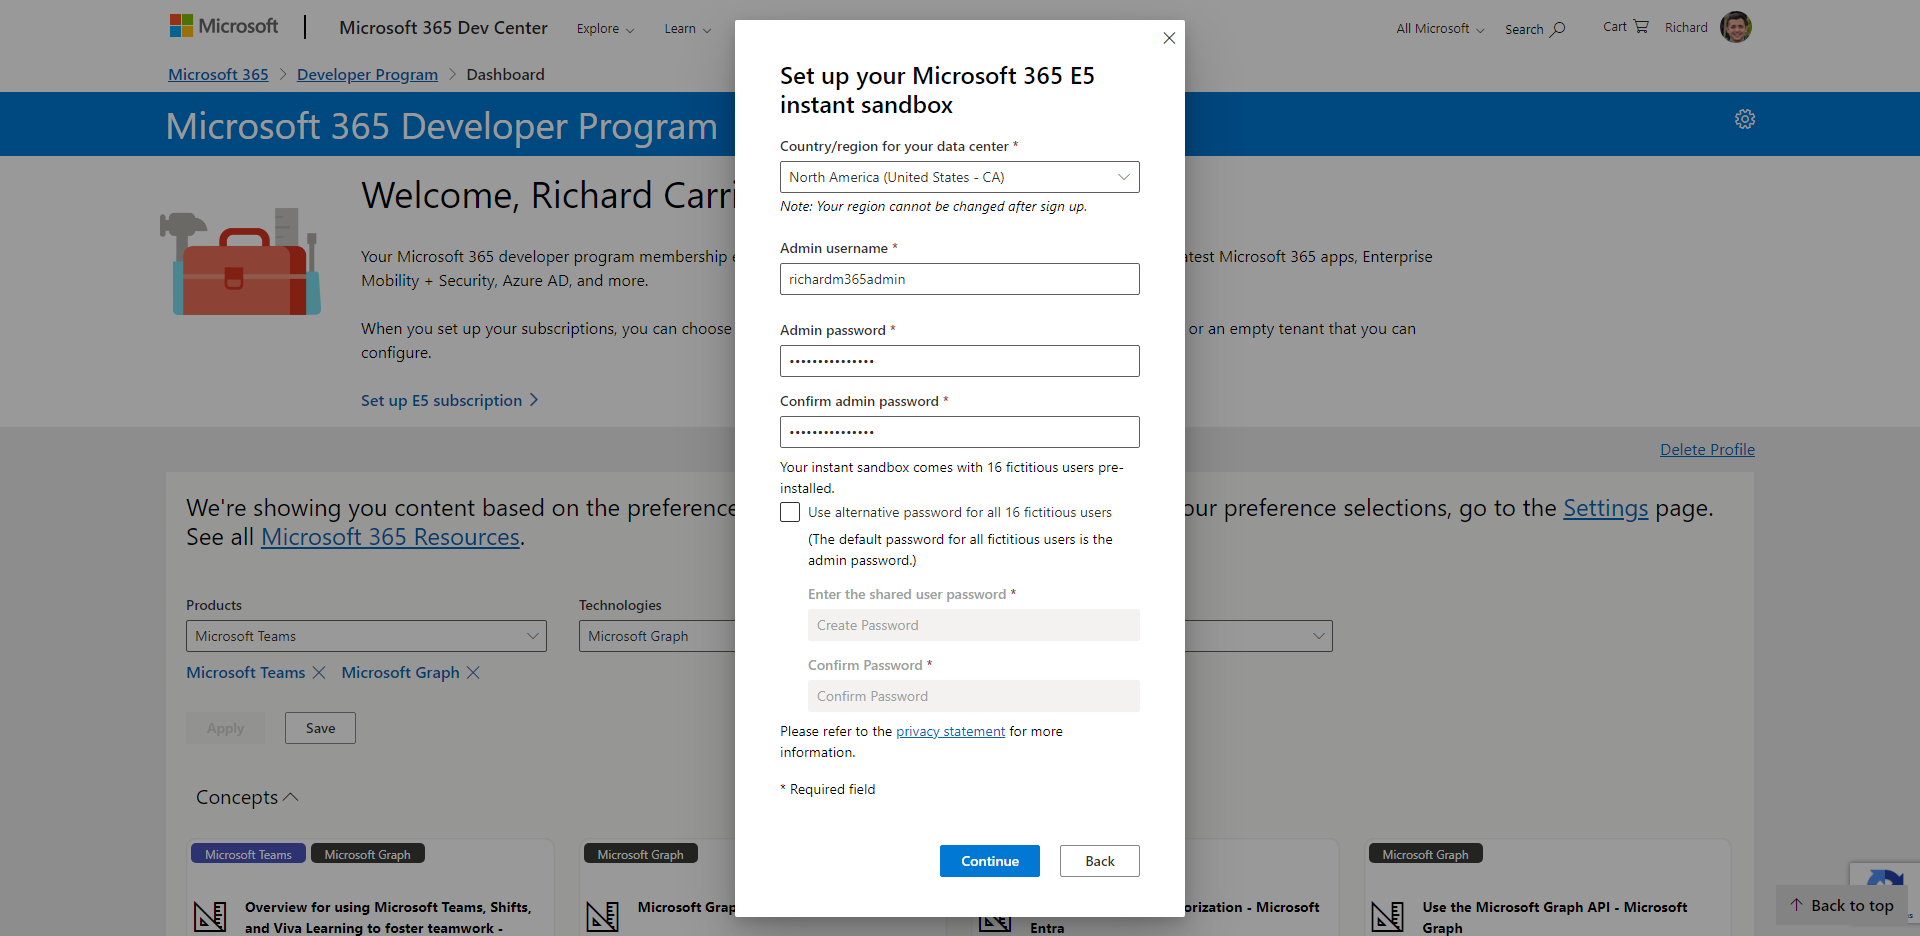 Set up your Microsoft 365 E5 instant sandbox screen